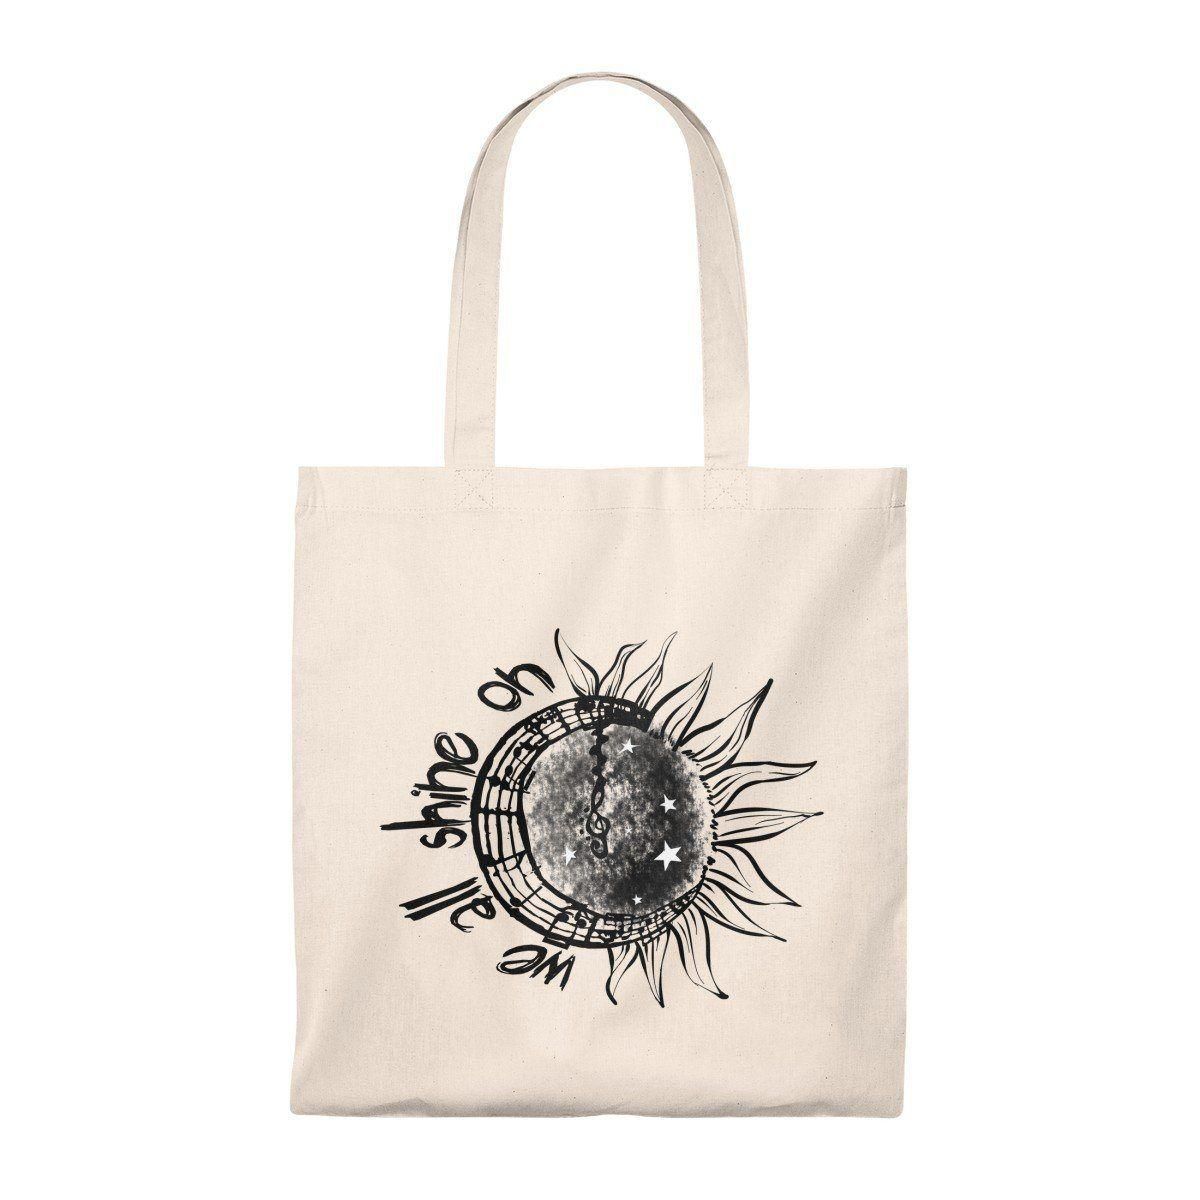 We Shine On Grey Sunflower Earth Printed Tote Bag